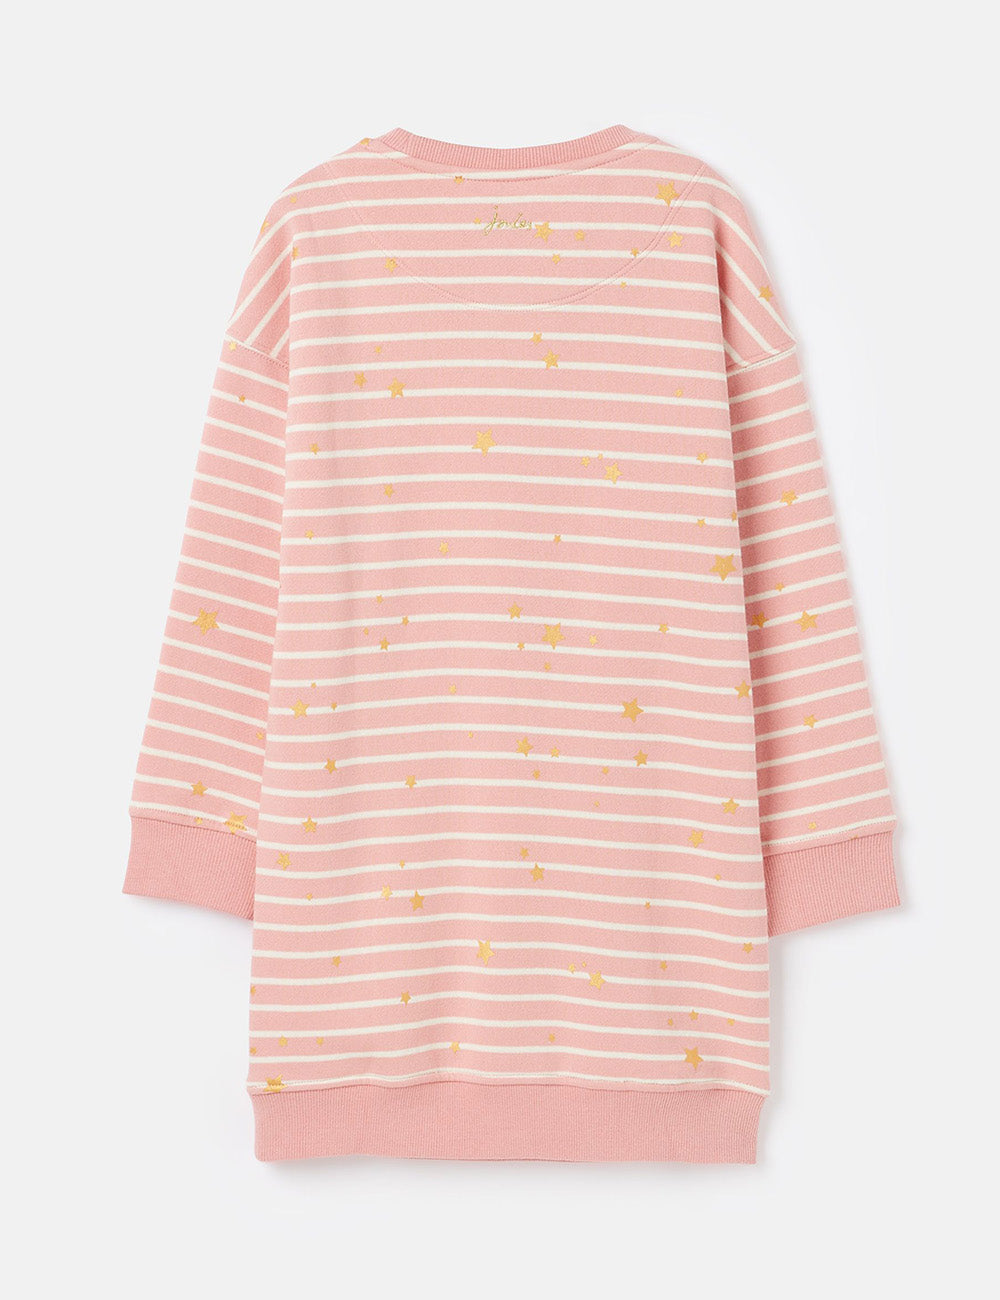 Joules Poppy Sweatshirt Dress - Blush Stripe/Star